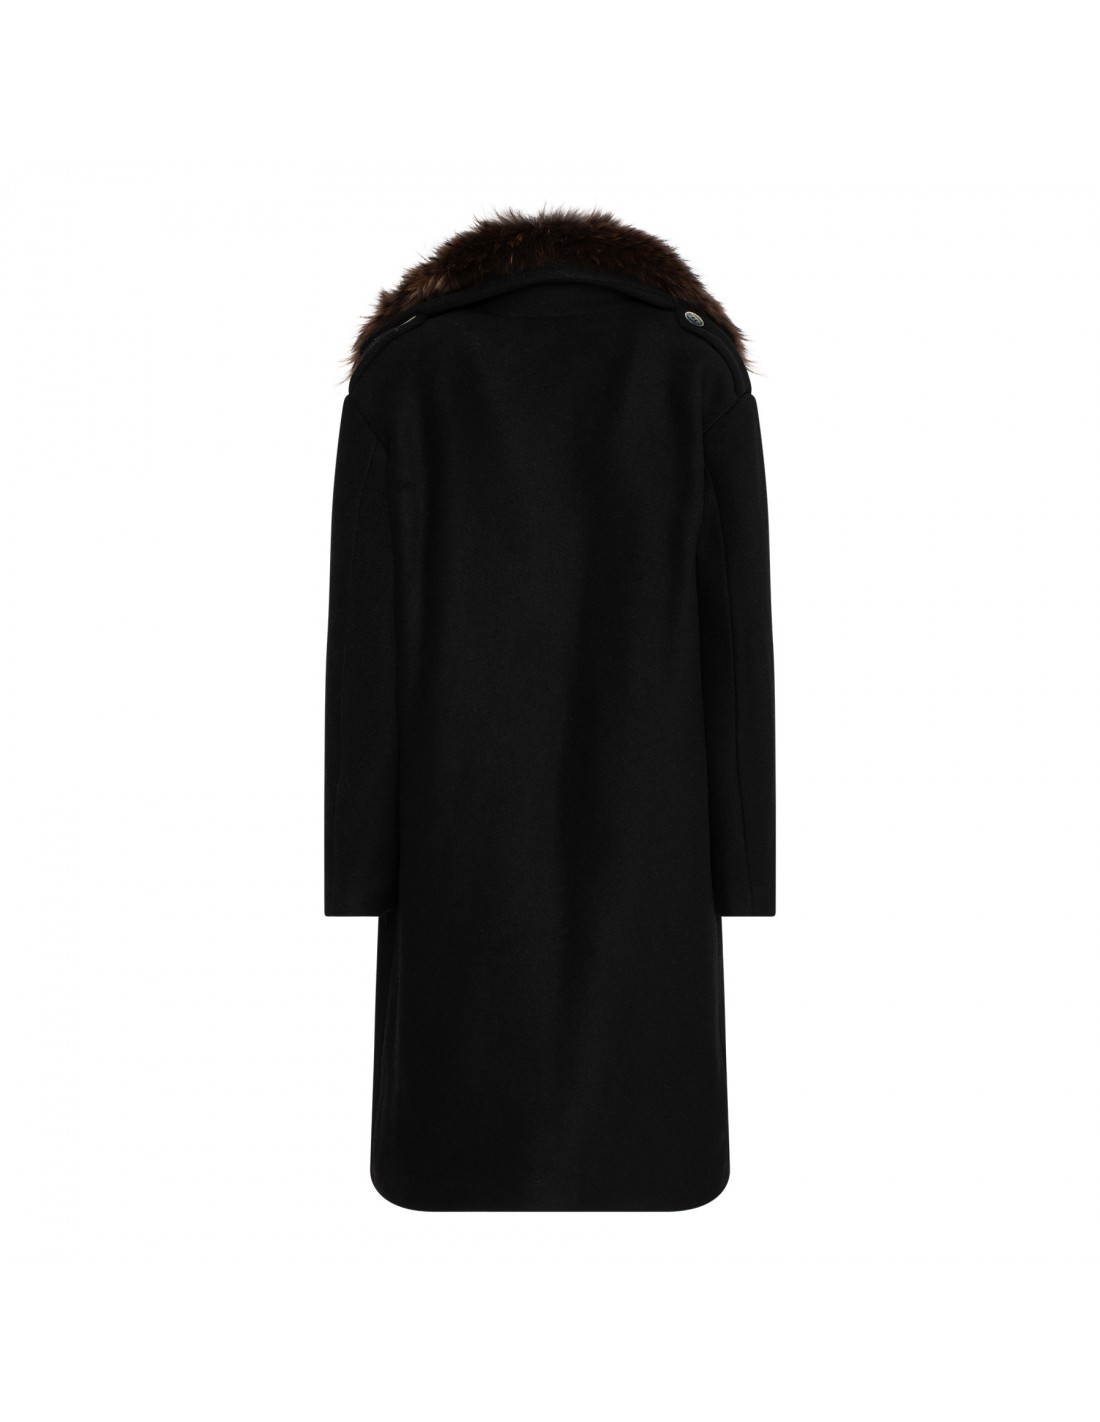 Black wool parka with fur collar